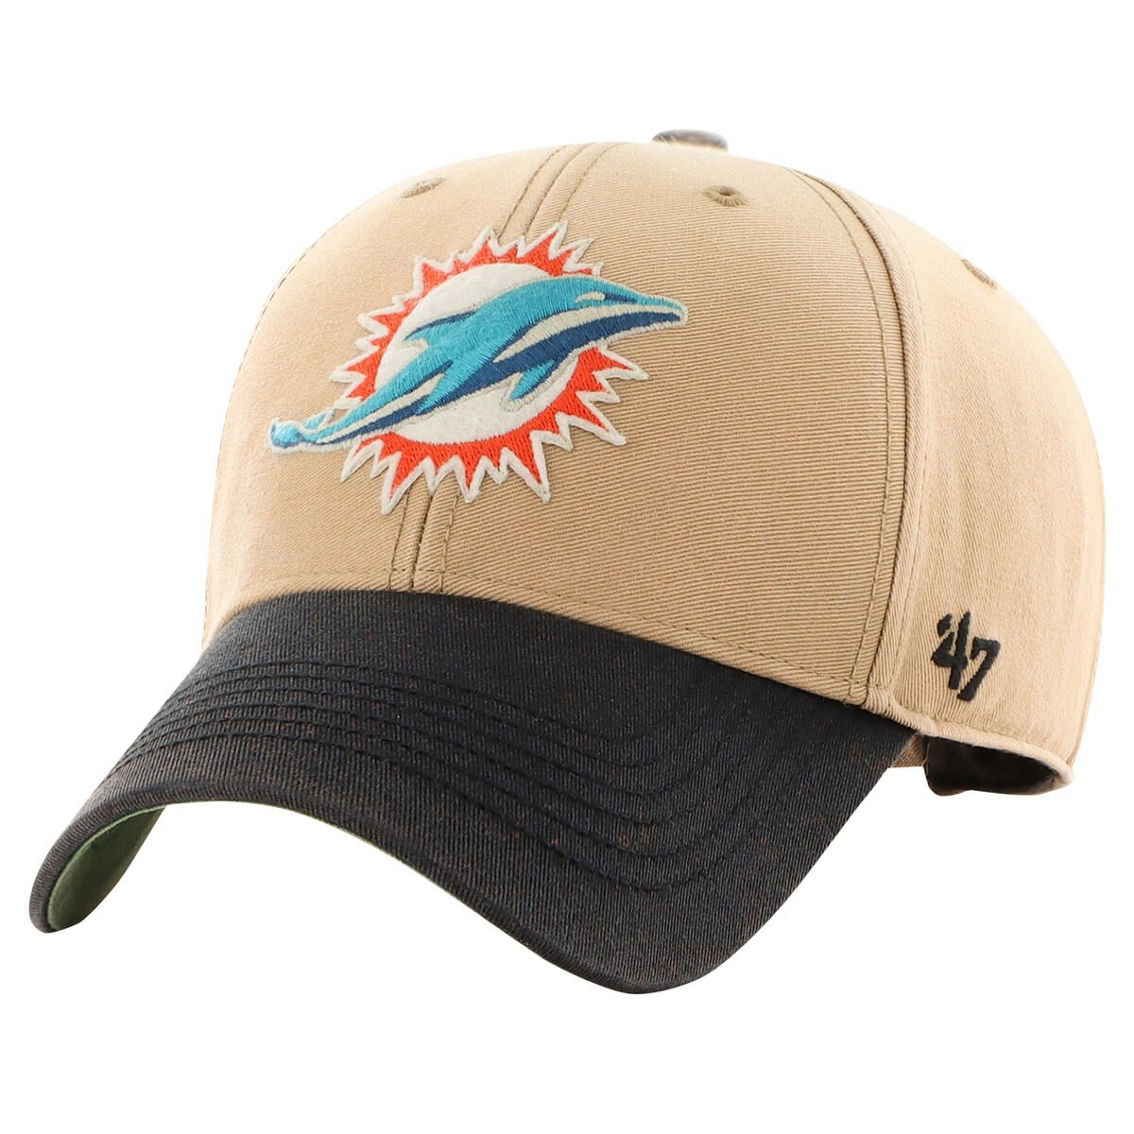 '47 Men's Khaki/Black Miami Dolphins Dusted Sedgwick MVP Adjustable Hat - Image 3 of 4